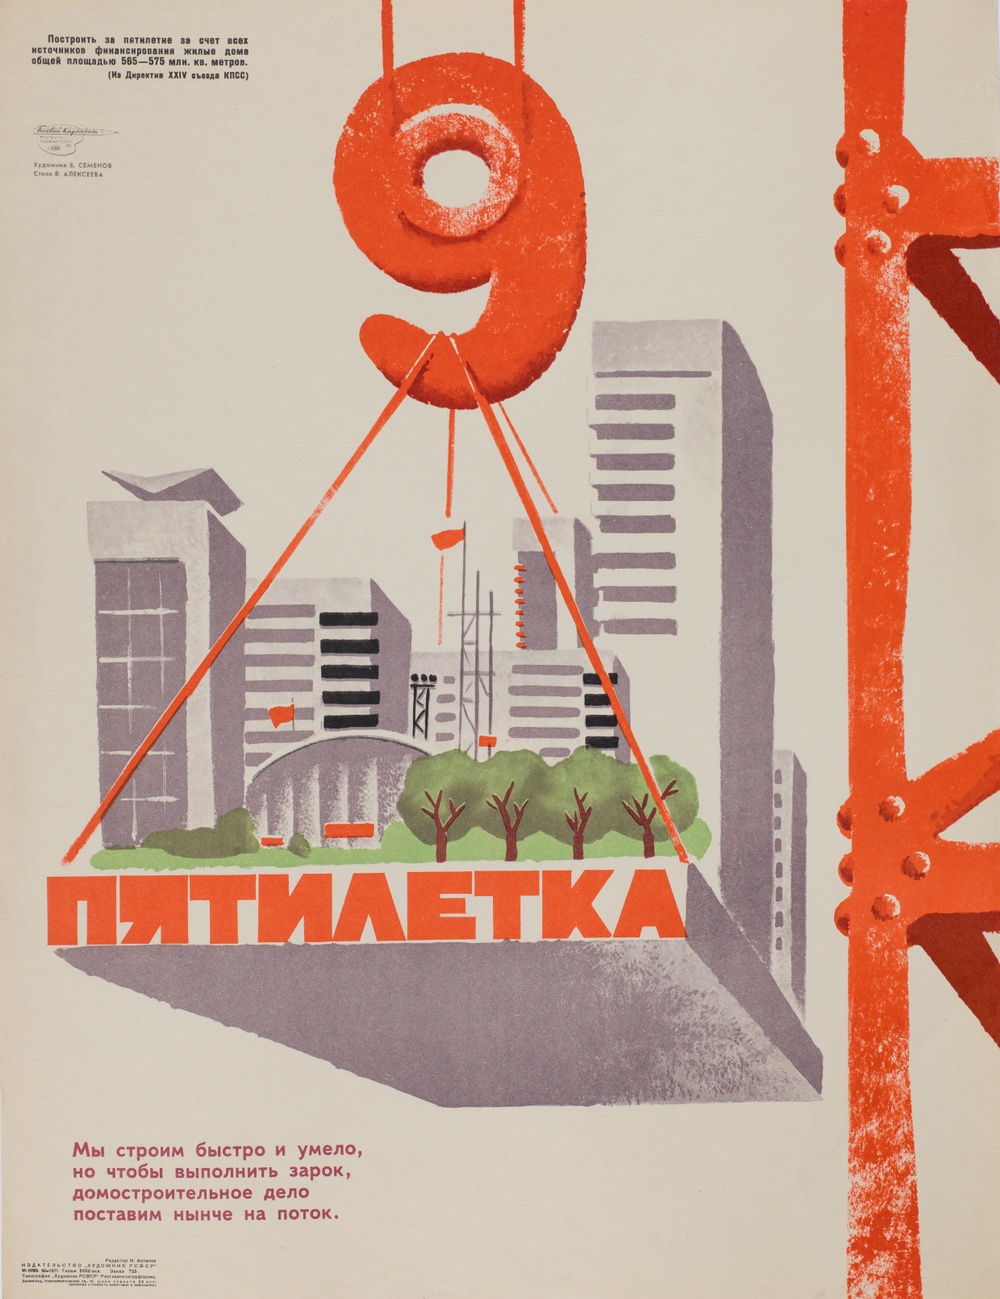 9th Five-year. B. Semyonov och V. Aleksejev. Affisch, Sovjetunionen. M. Gordo. 